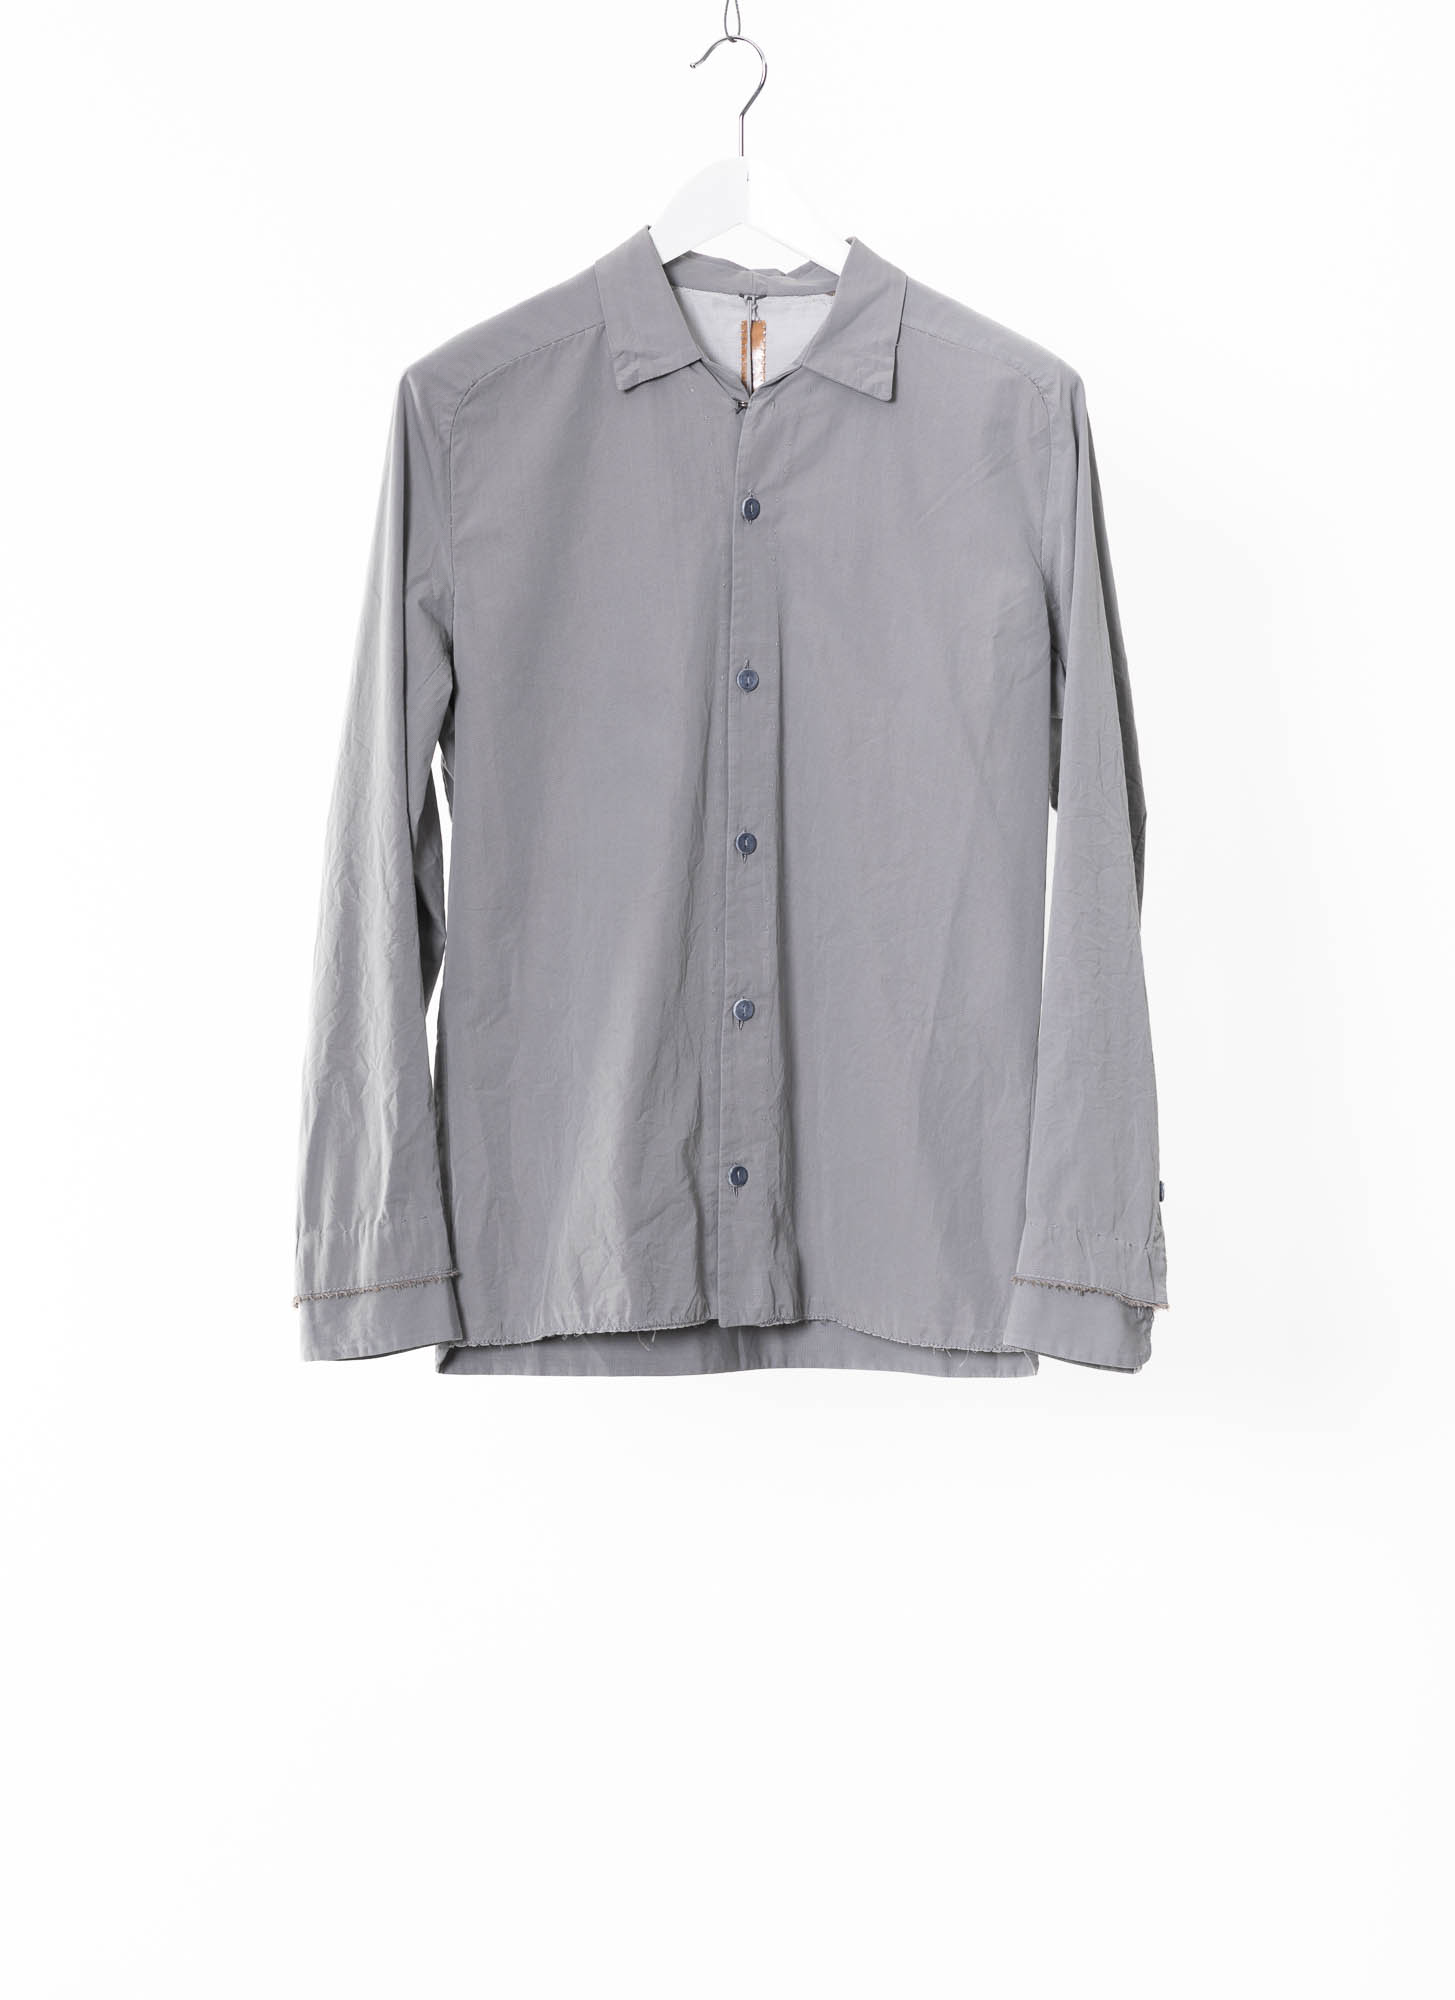 hide-m | LAYER-0 men shirt, light grey, 100% cotton